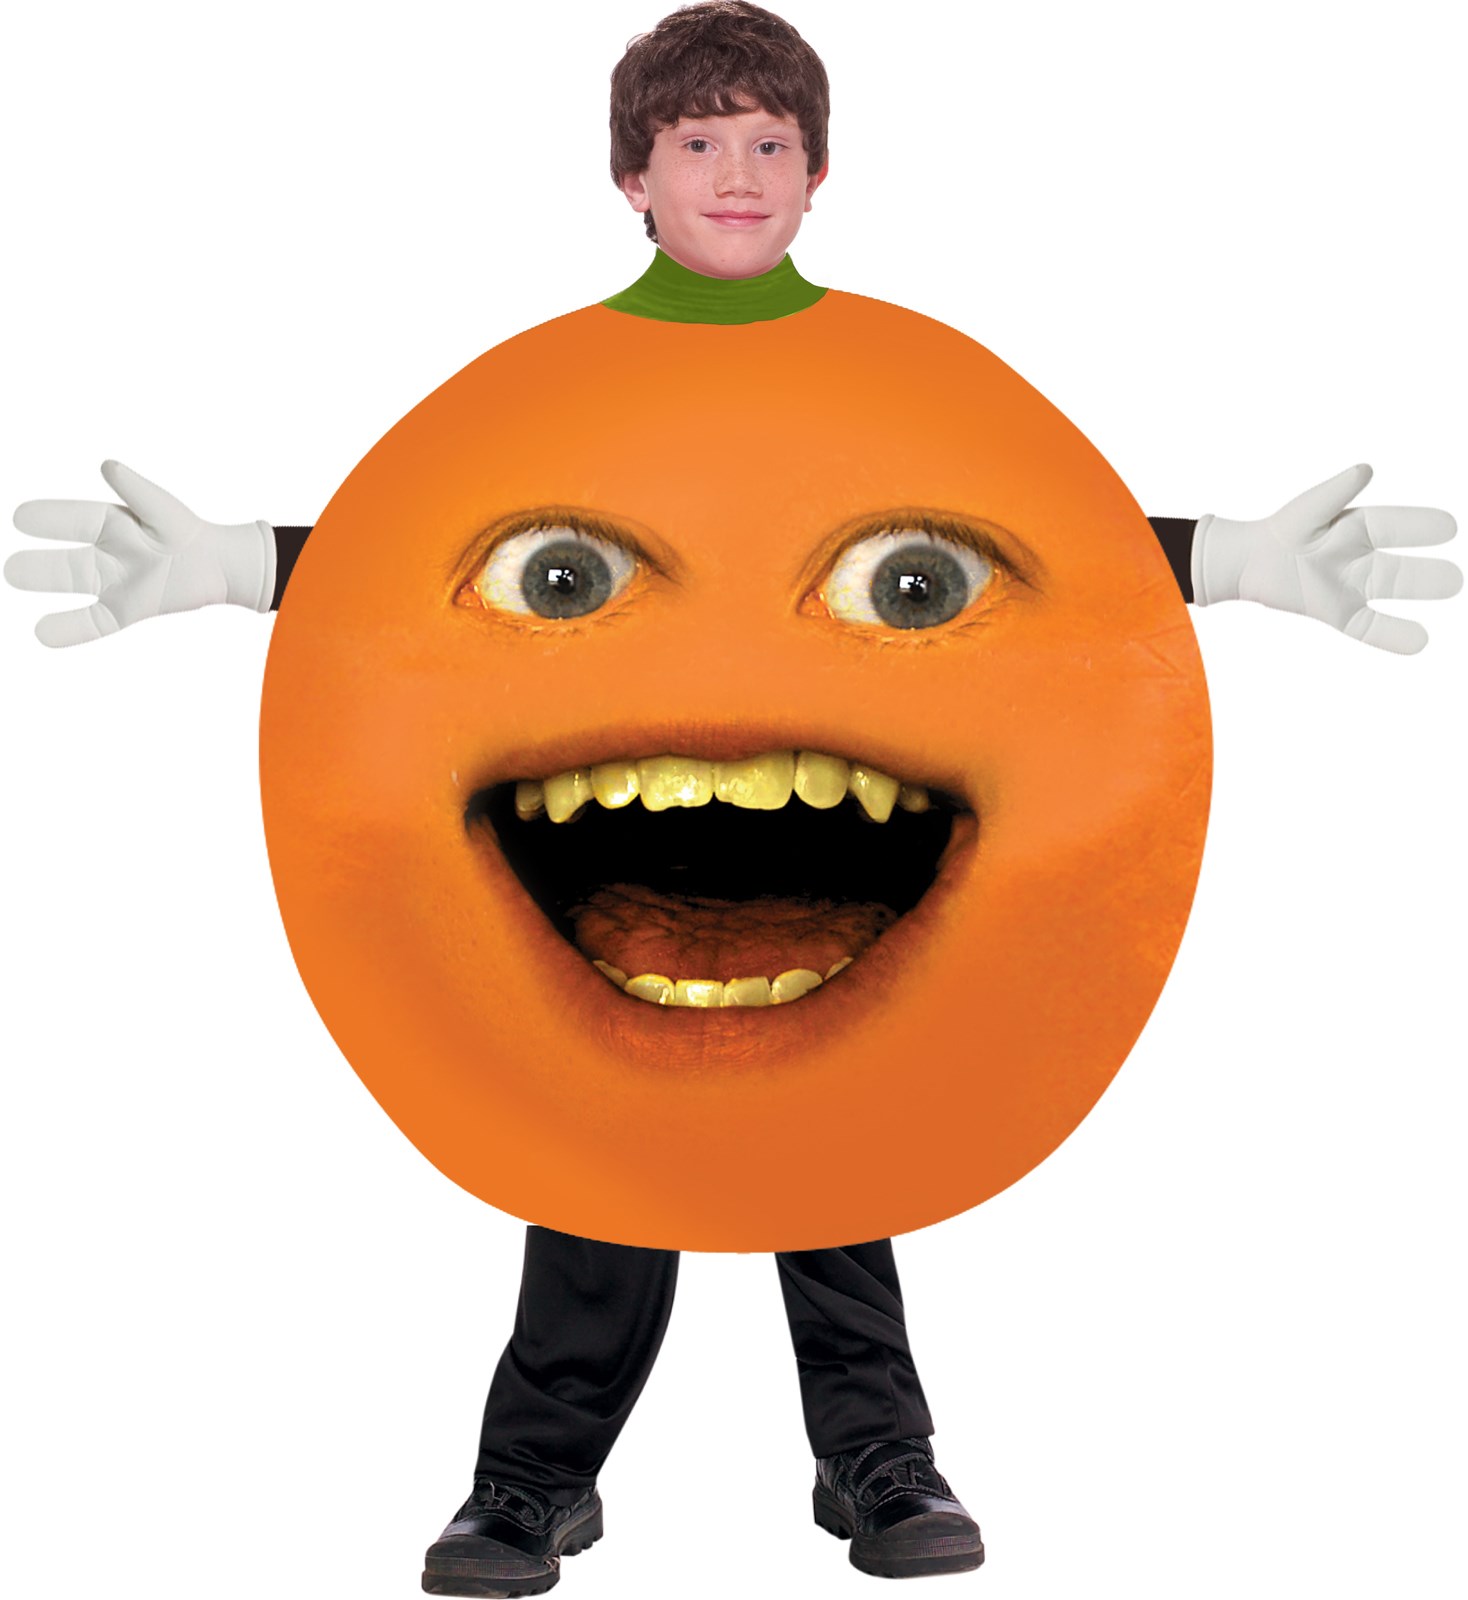 Annoying Orange Child Costume